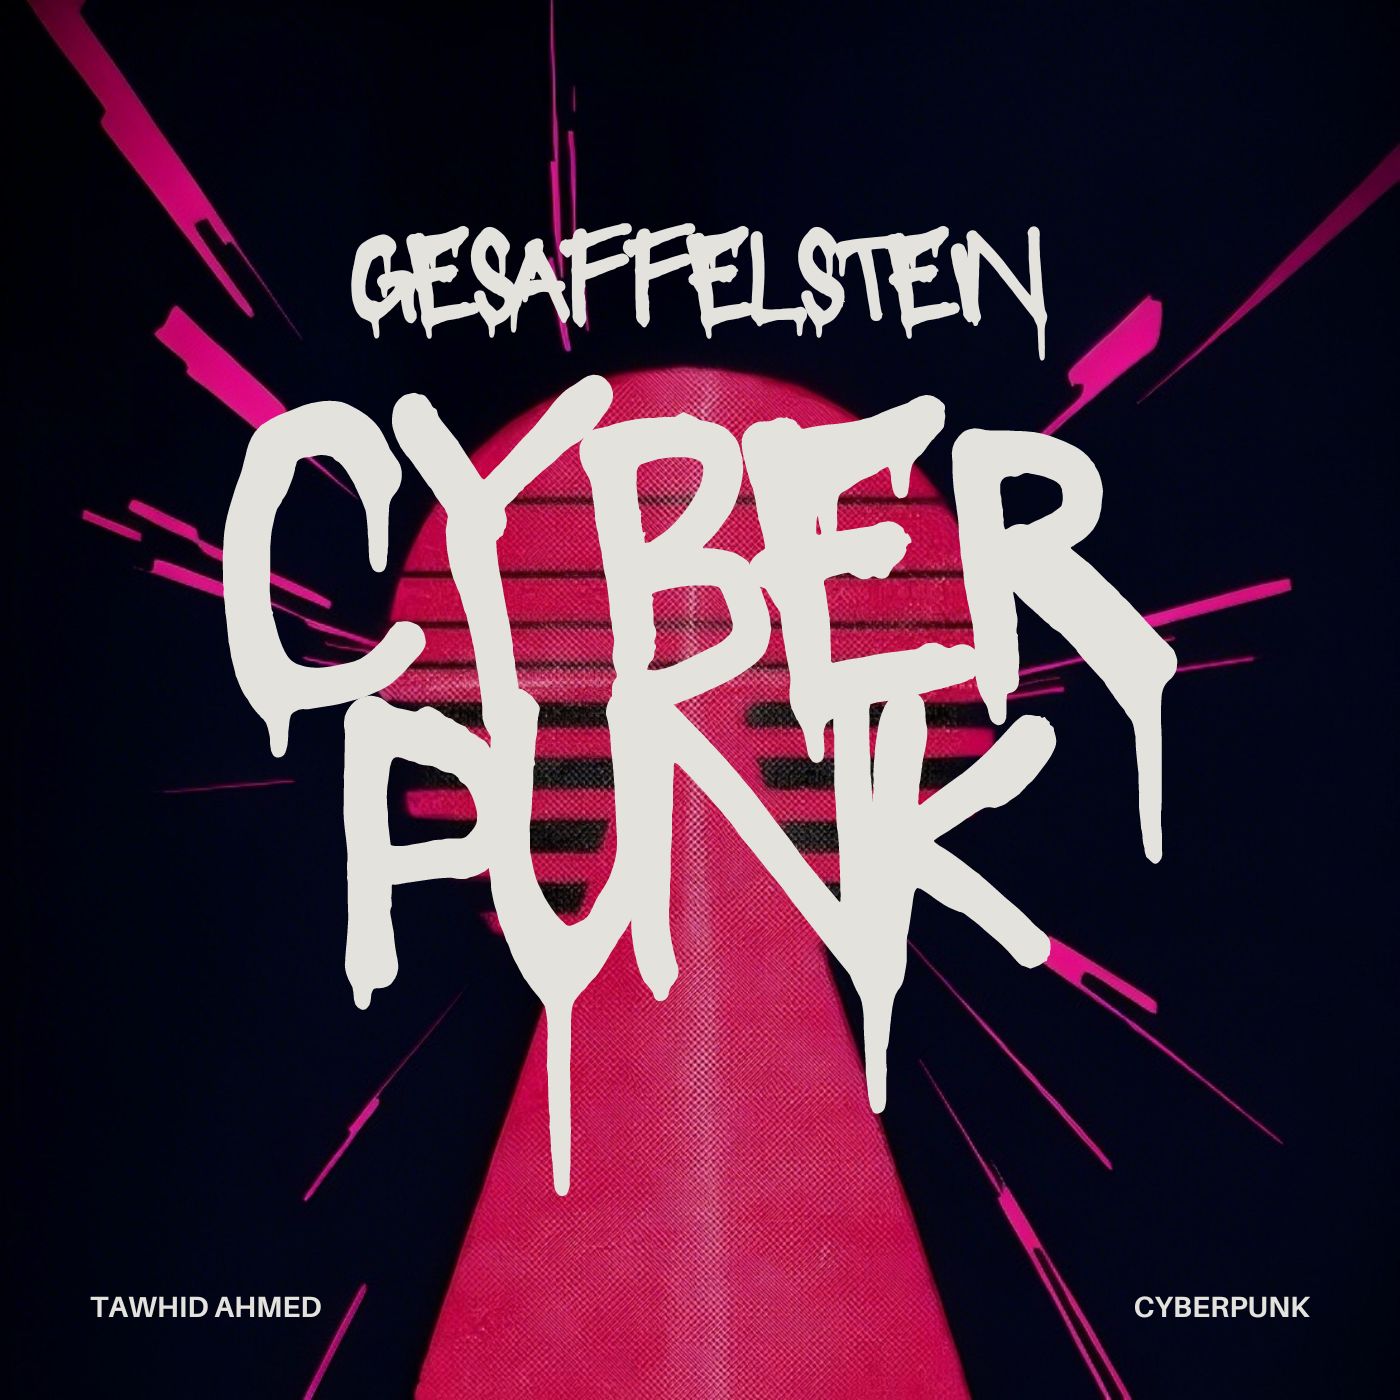 Gesaffelstein Style Cyberpunk/Dark Synthwave - Tawhid Ahmed - Tunebat Marketplace